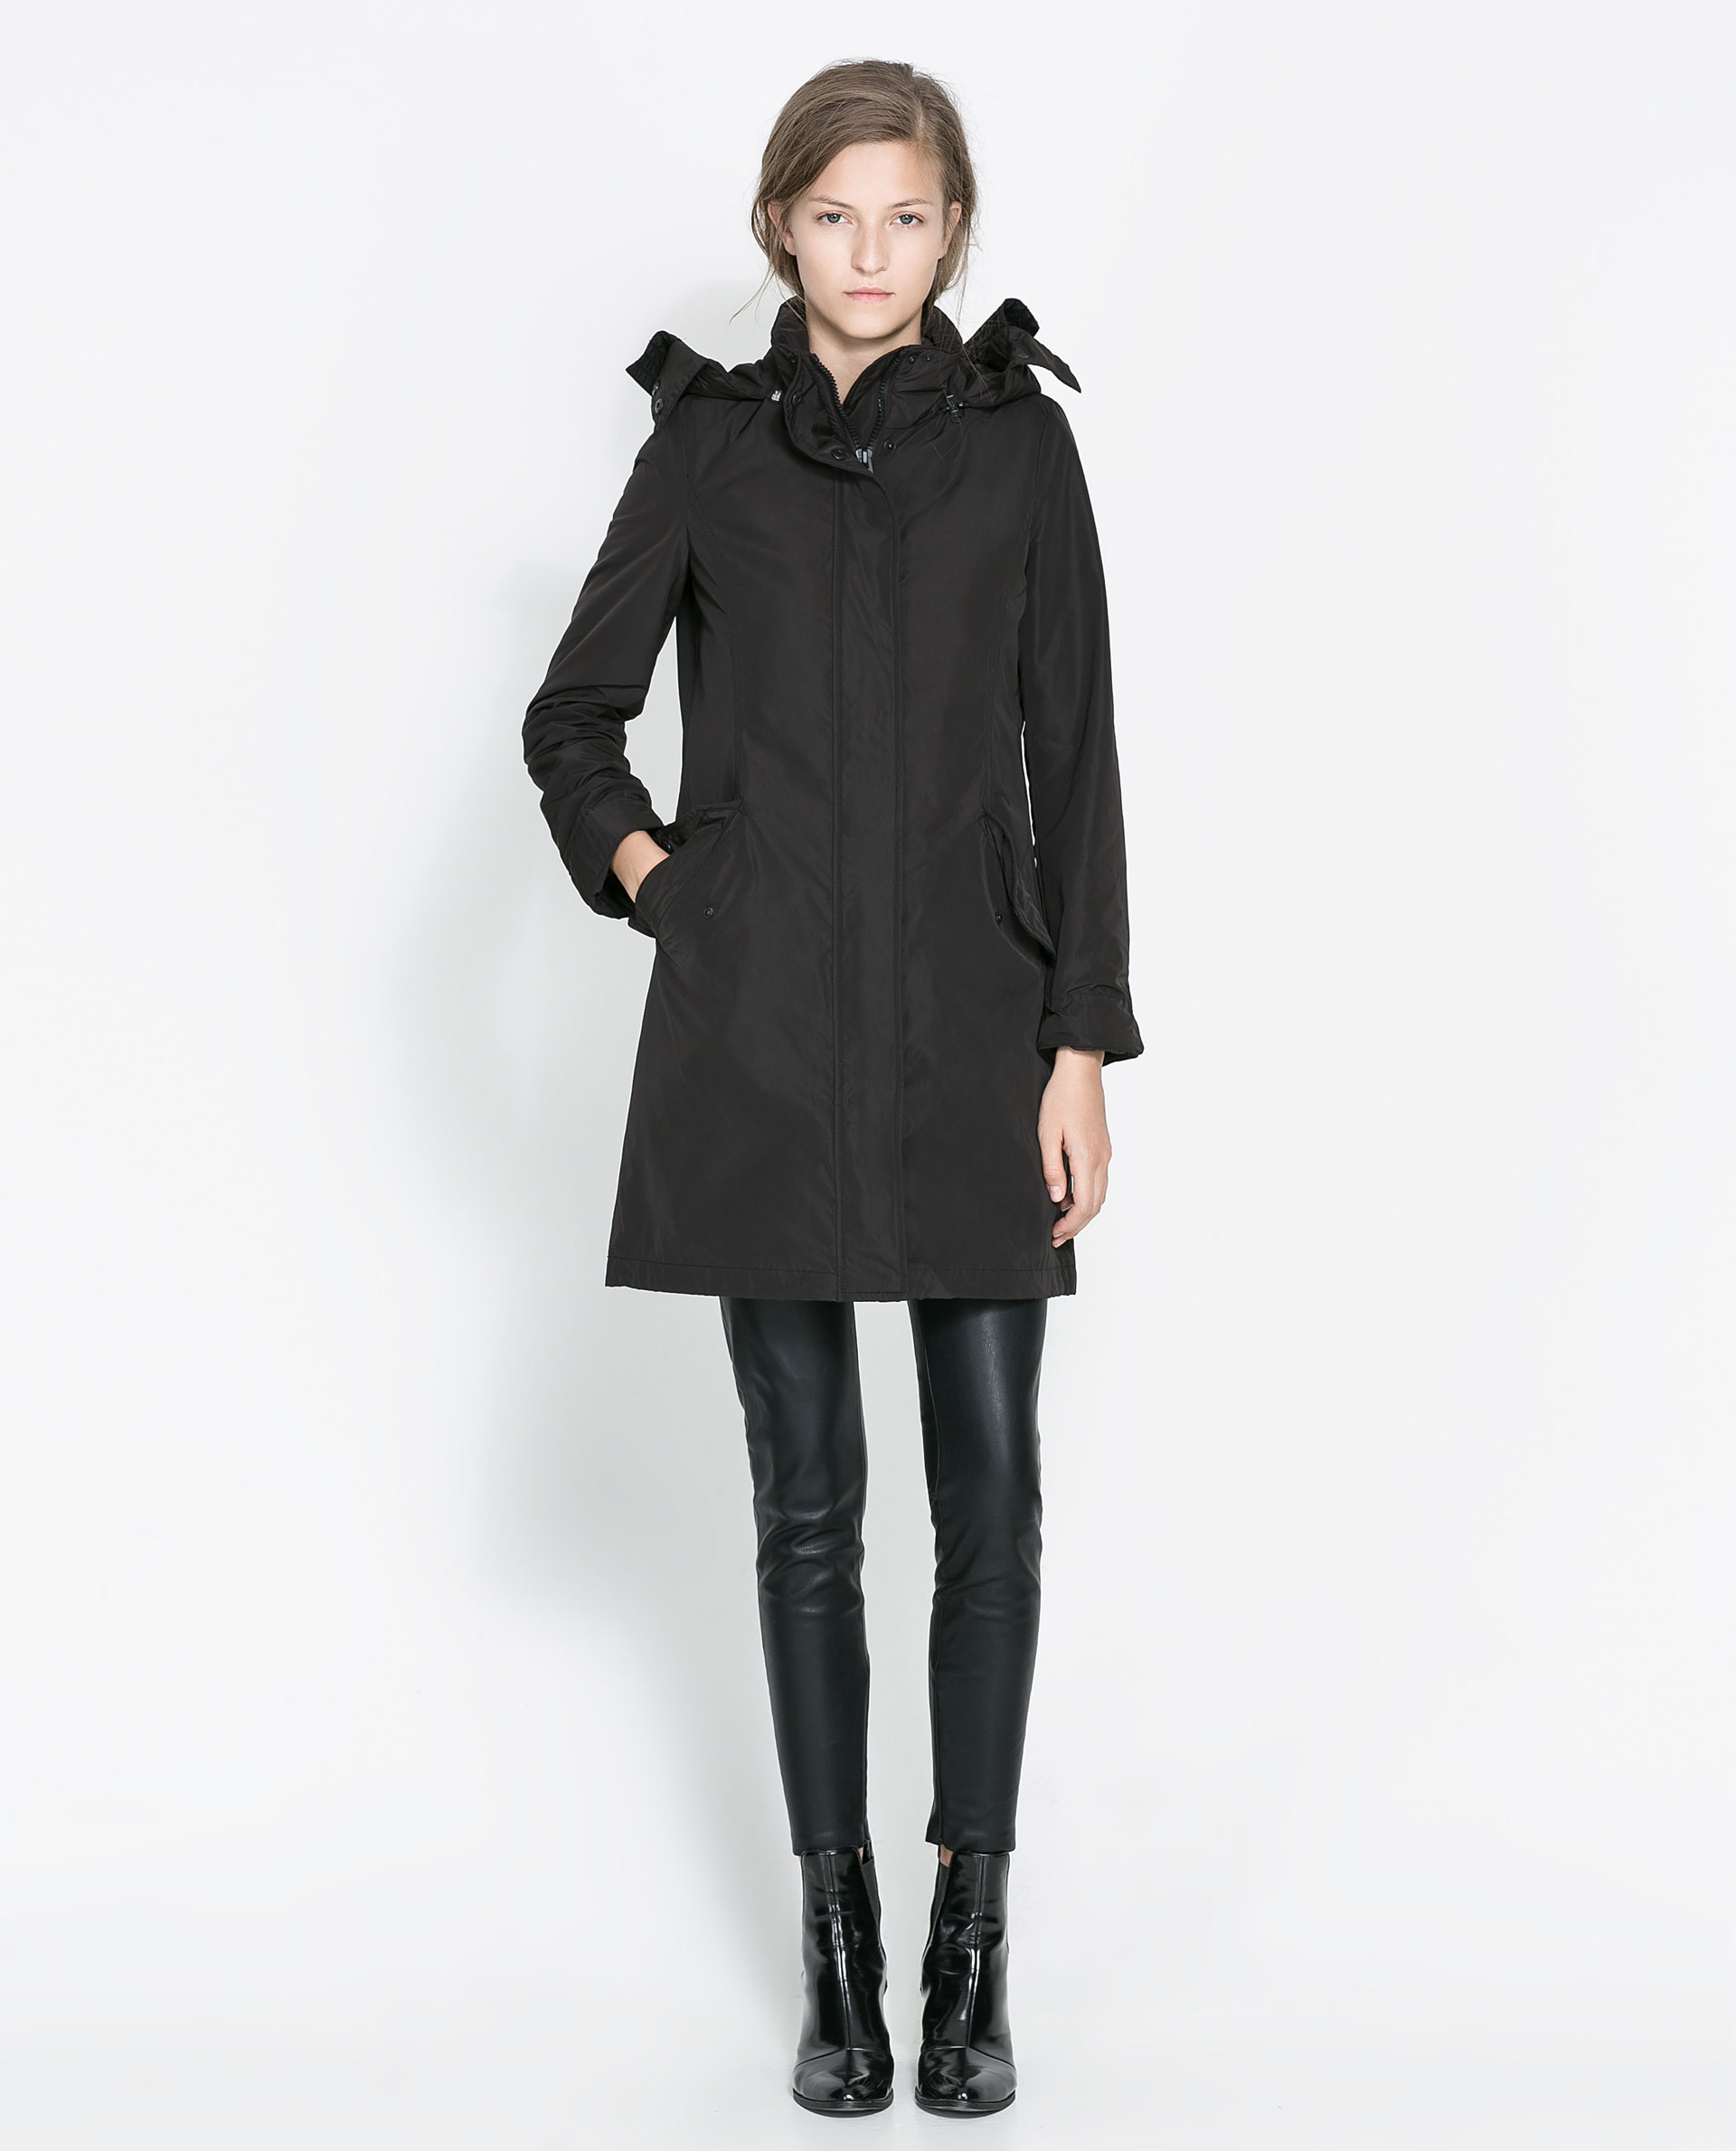 Long Black Coat With Hood